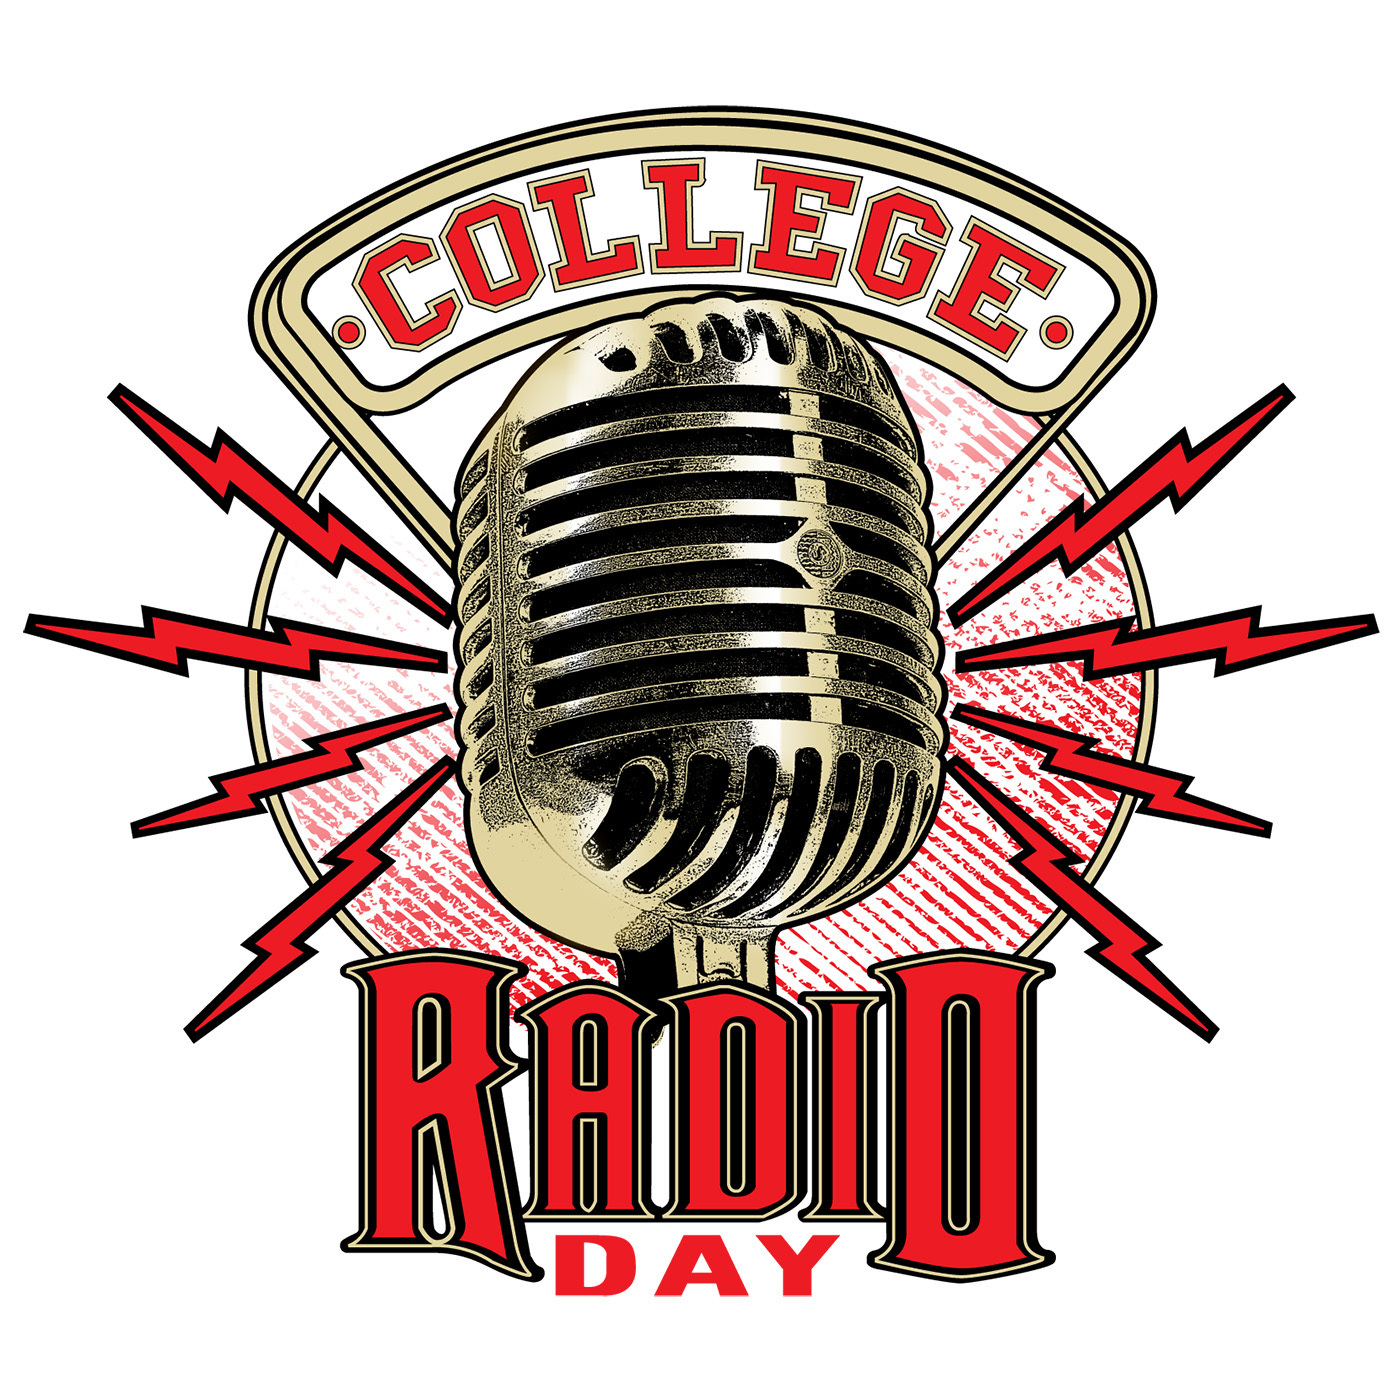 World College Radio Day founder Dr. Rob Quicke